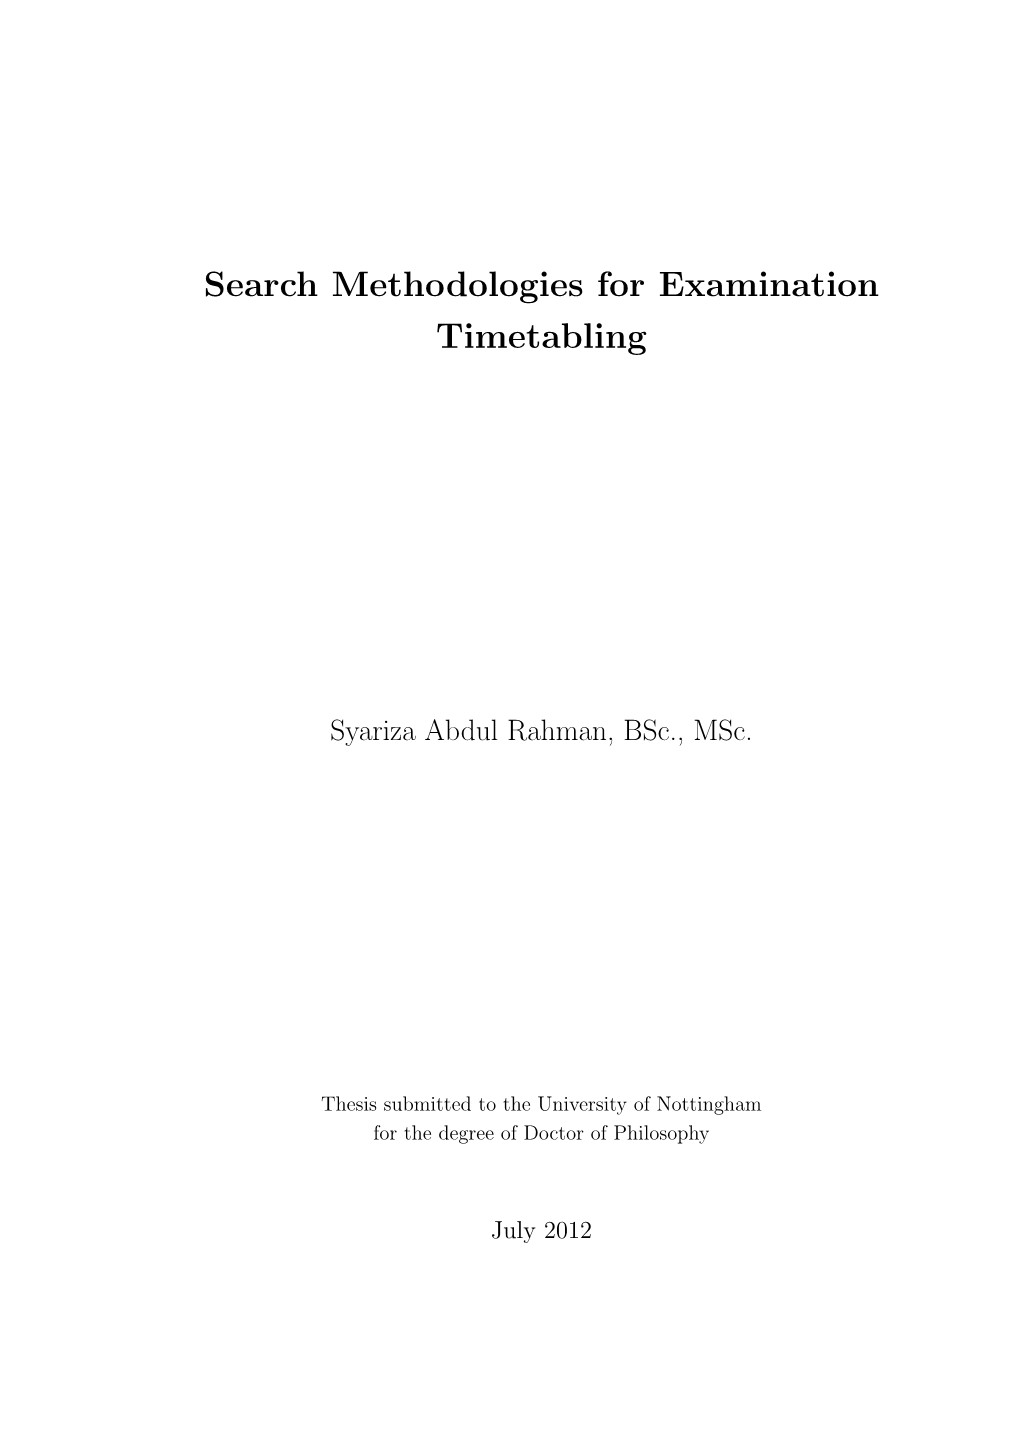 Search Methodologies for Examination Timetabling